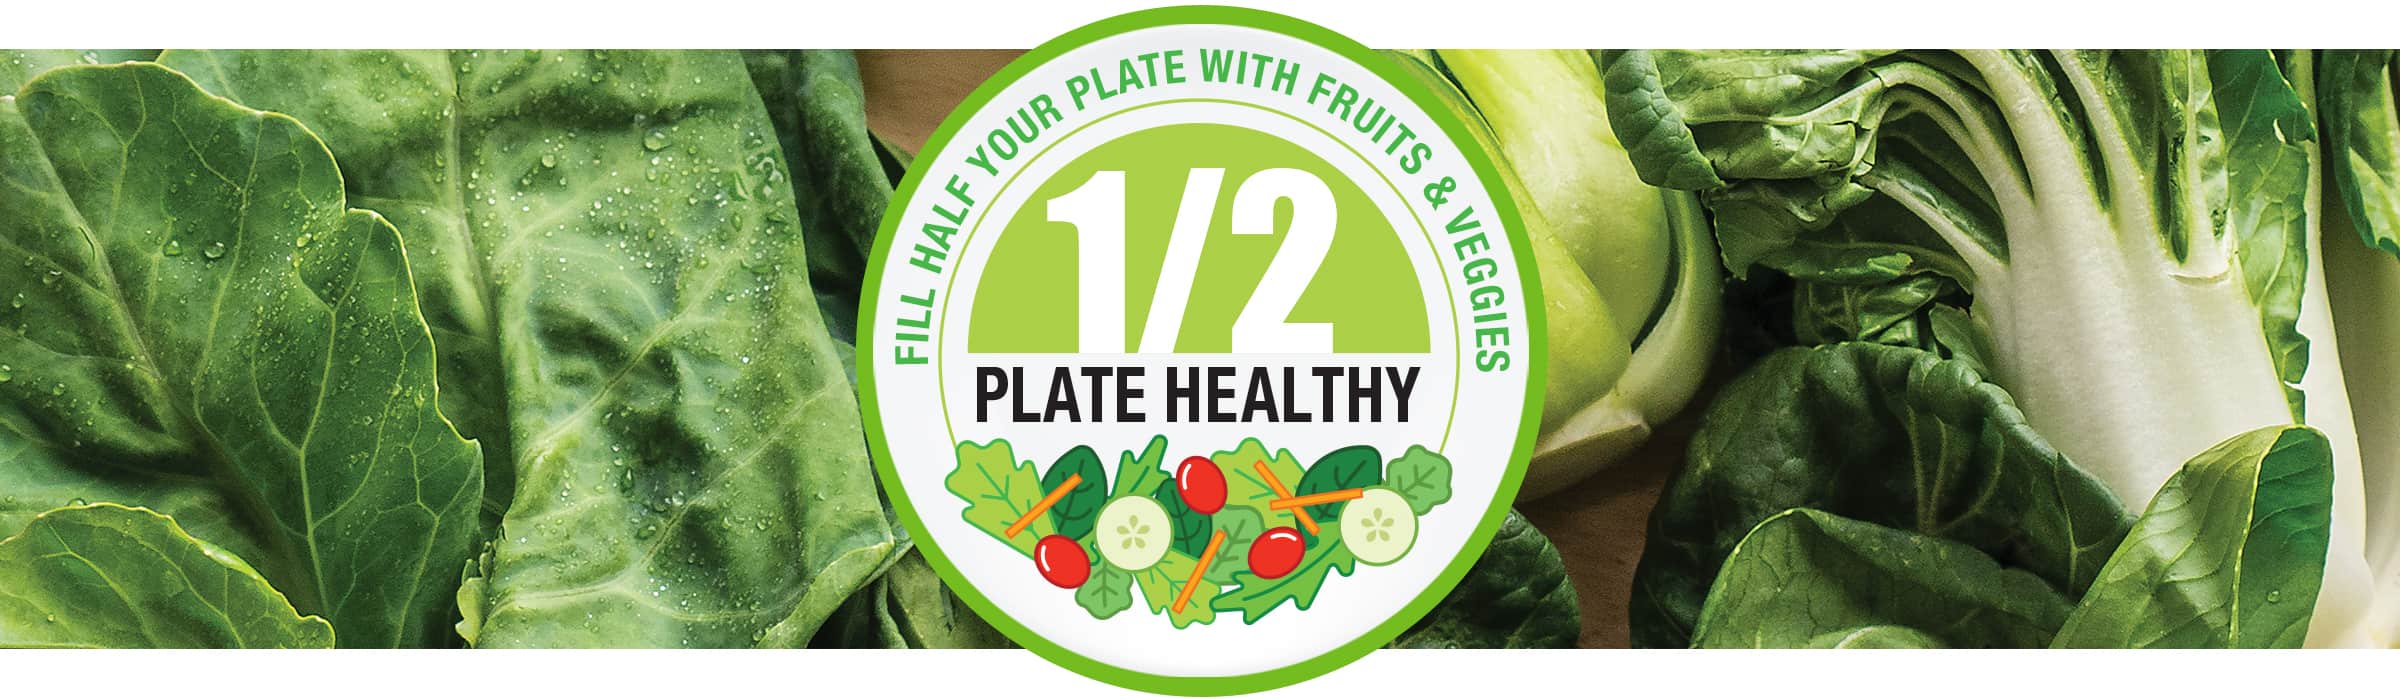 Half Plate Healthy